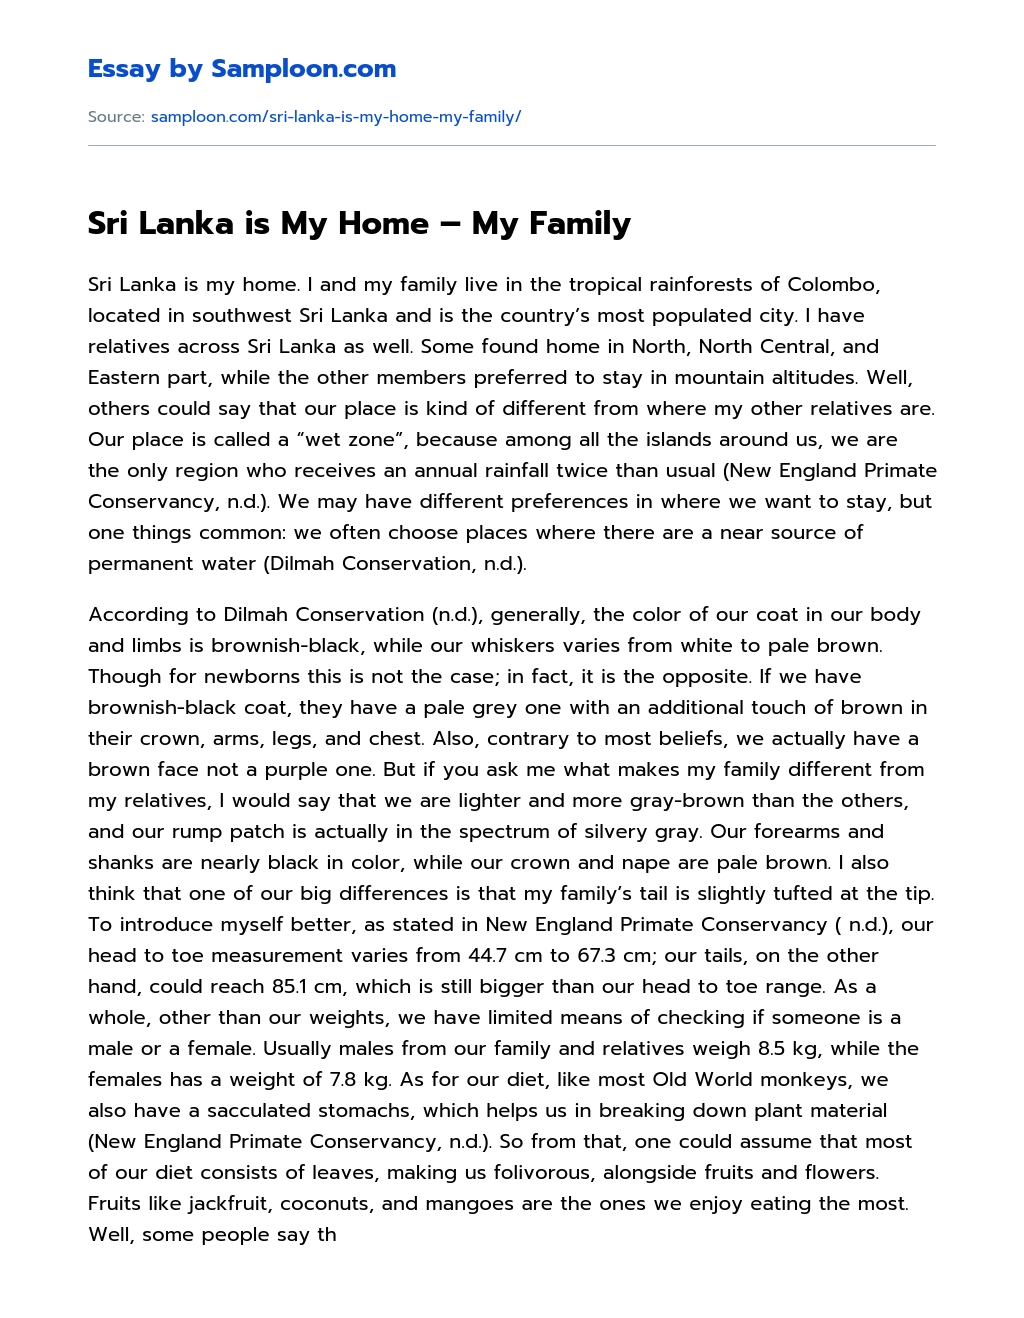 Sri Lanka is My Home – My Family essay